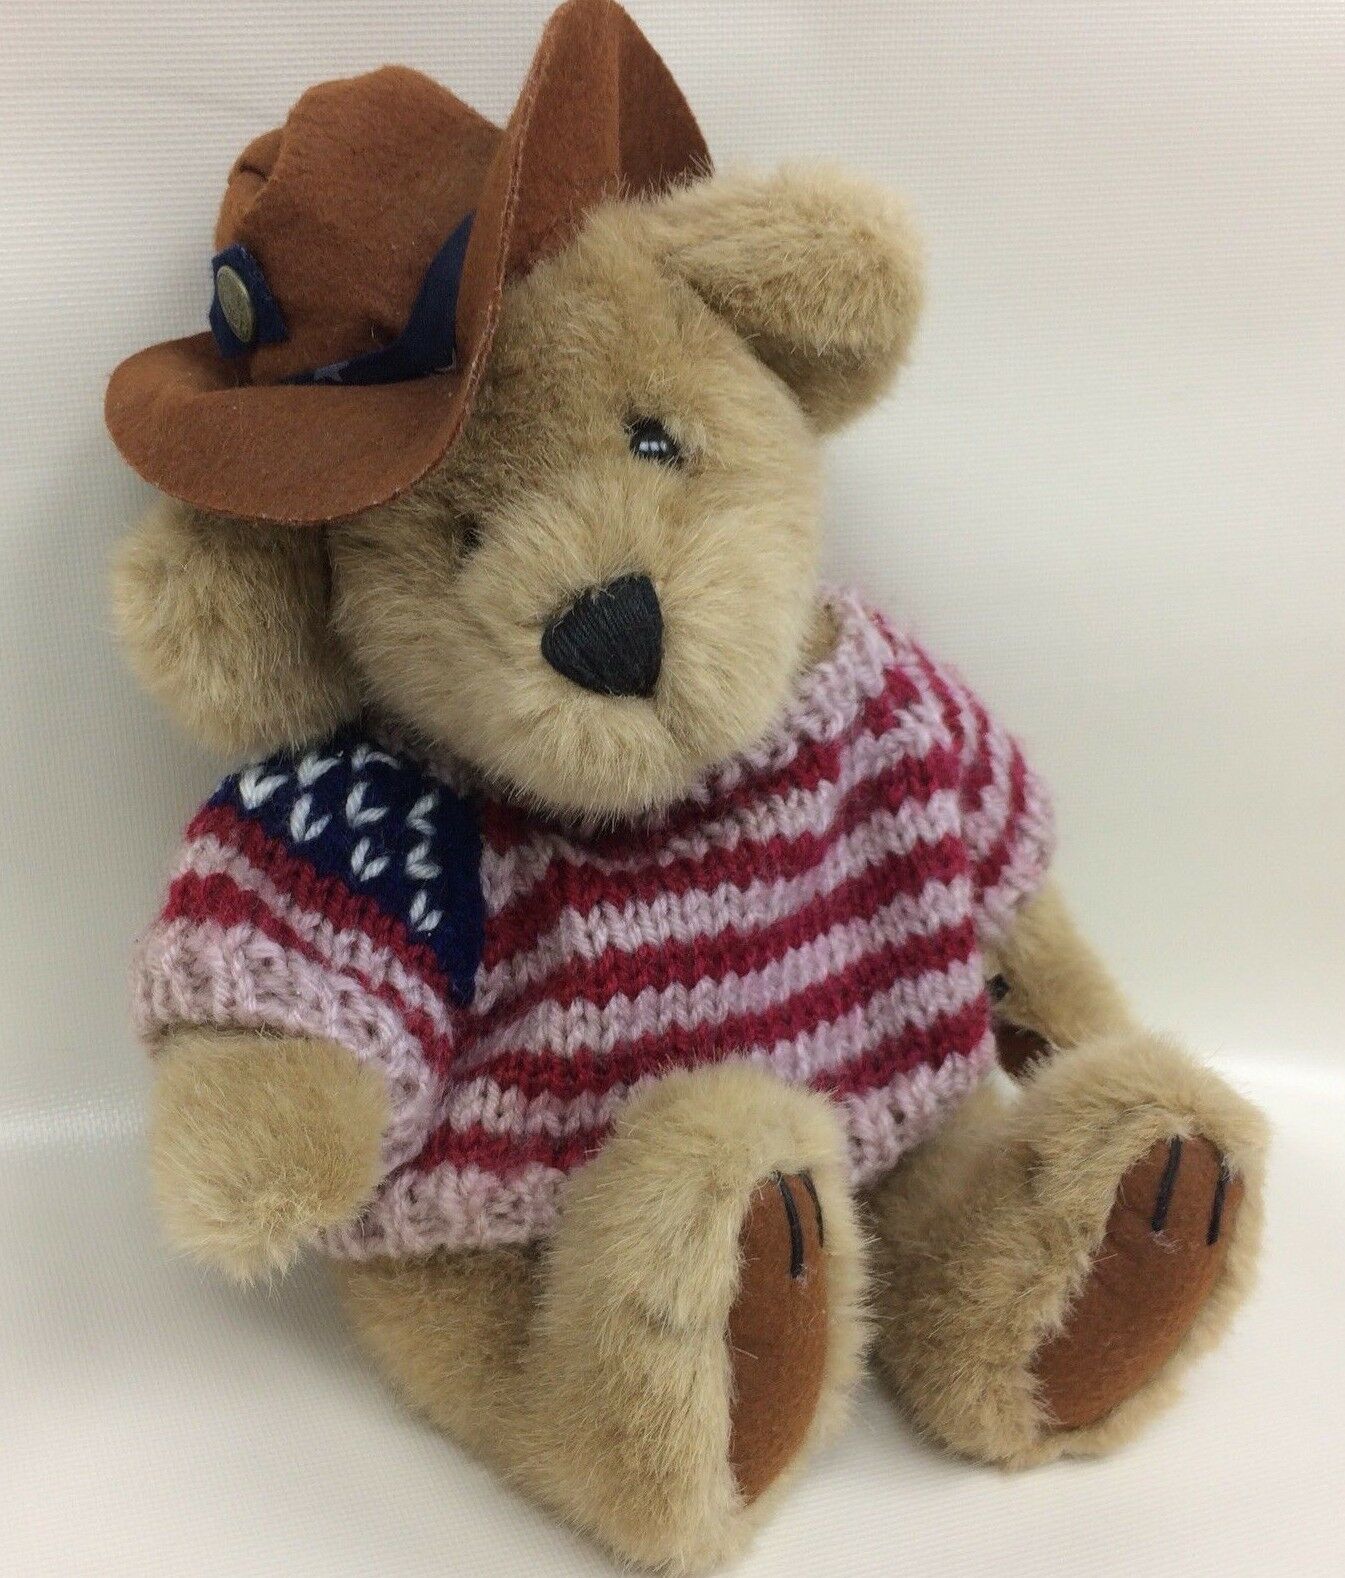 Patriotic Plush Teddy Bear Knit Sweater And Brown Felt Hat Original Brass Button